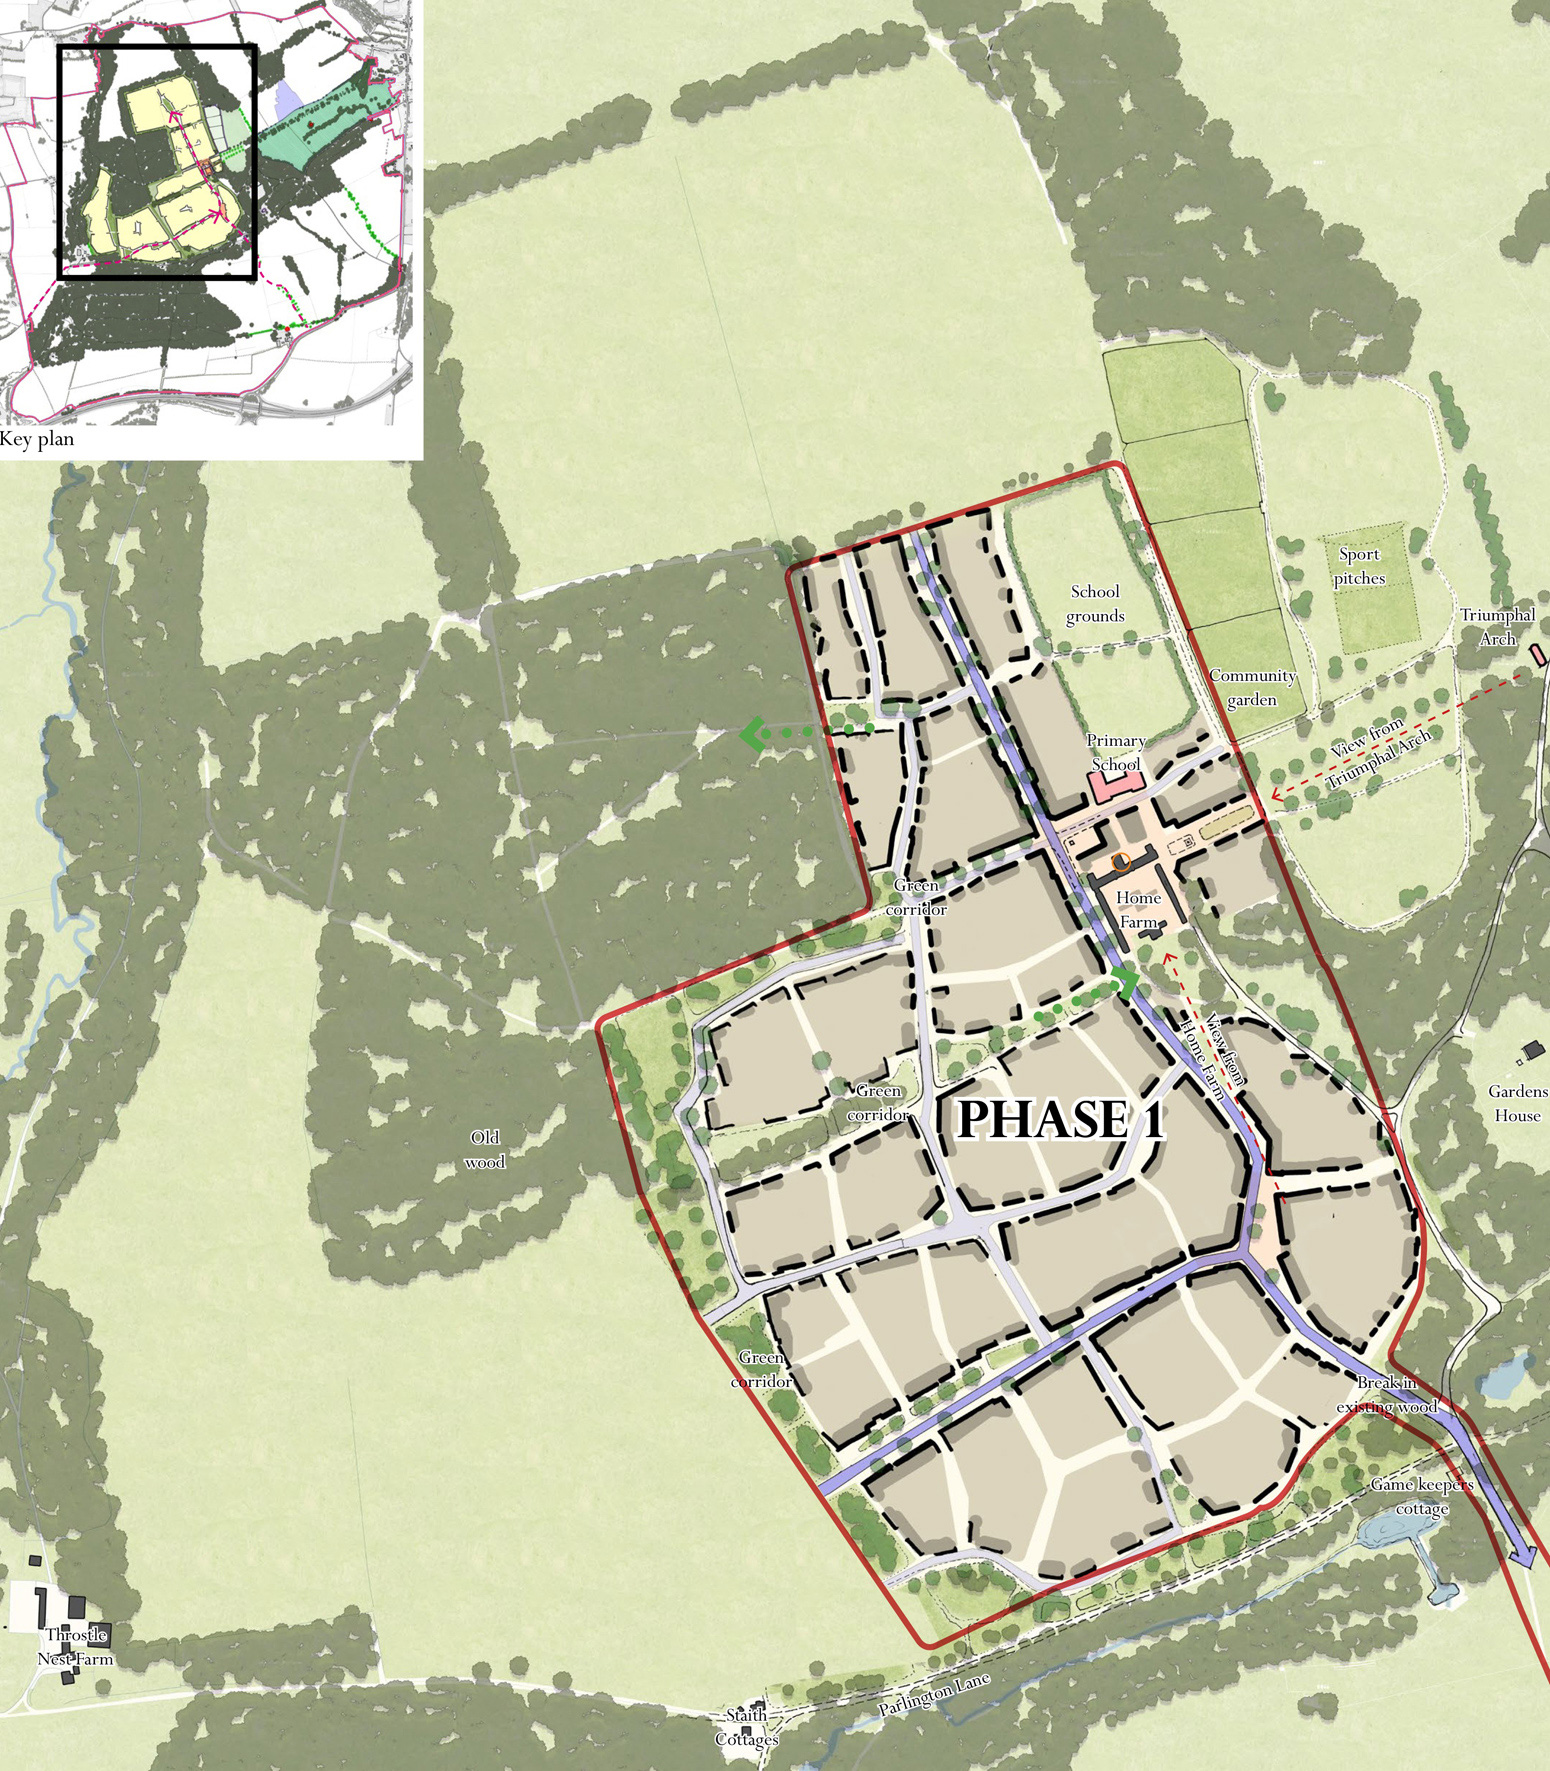 Map of phase 1 development of Parlington Village